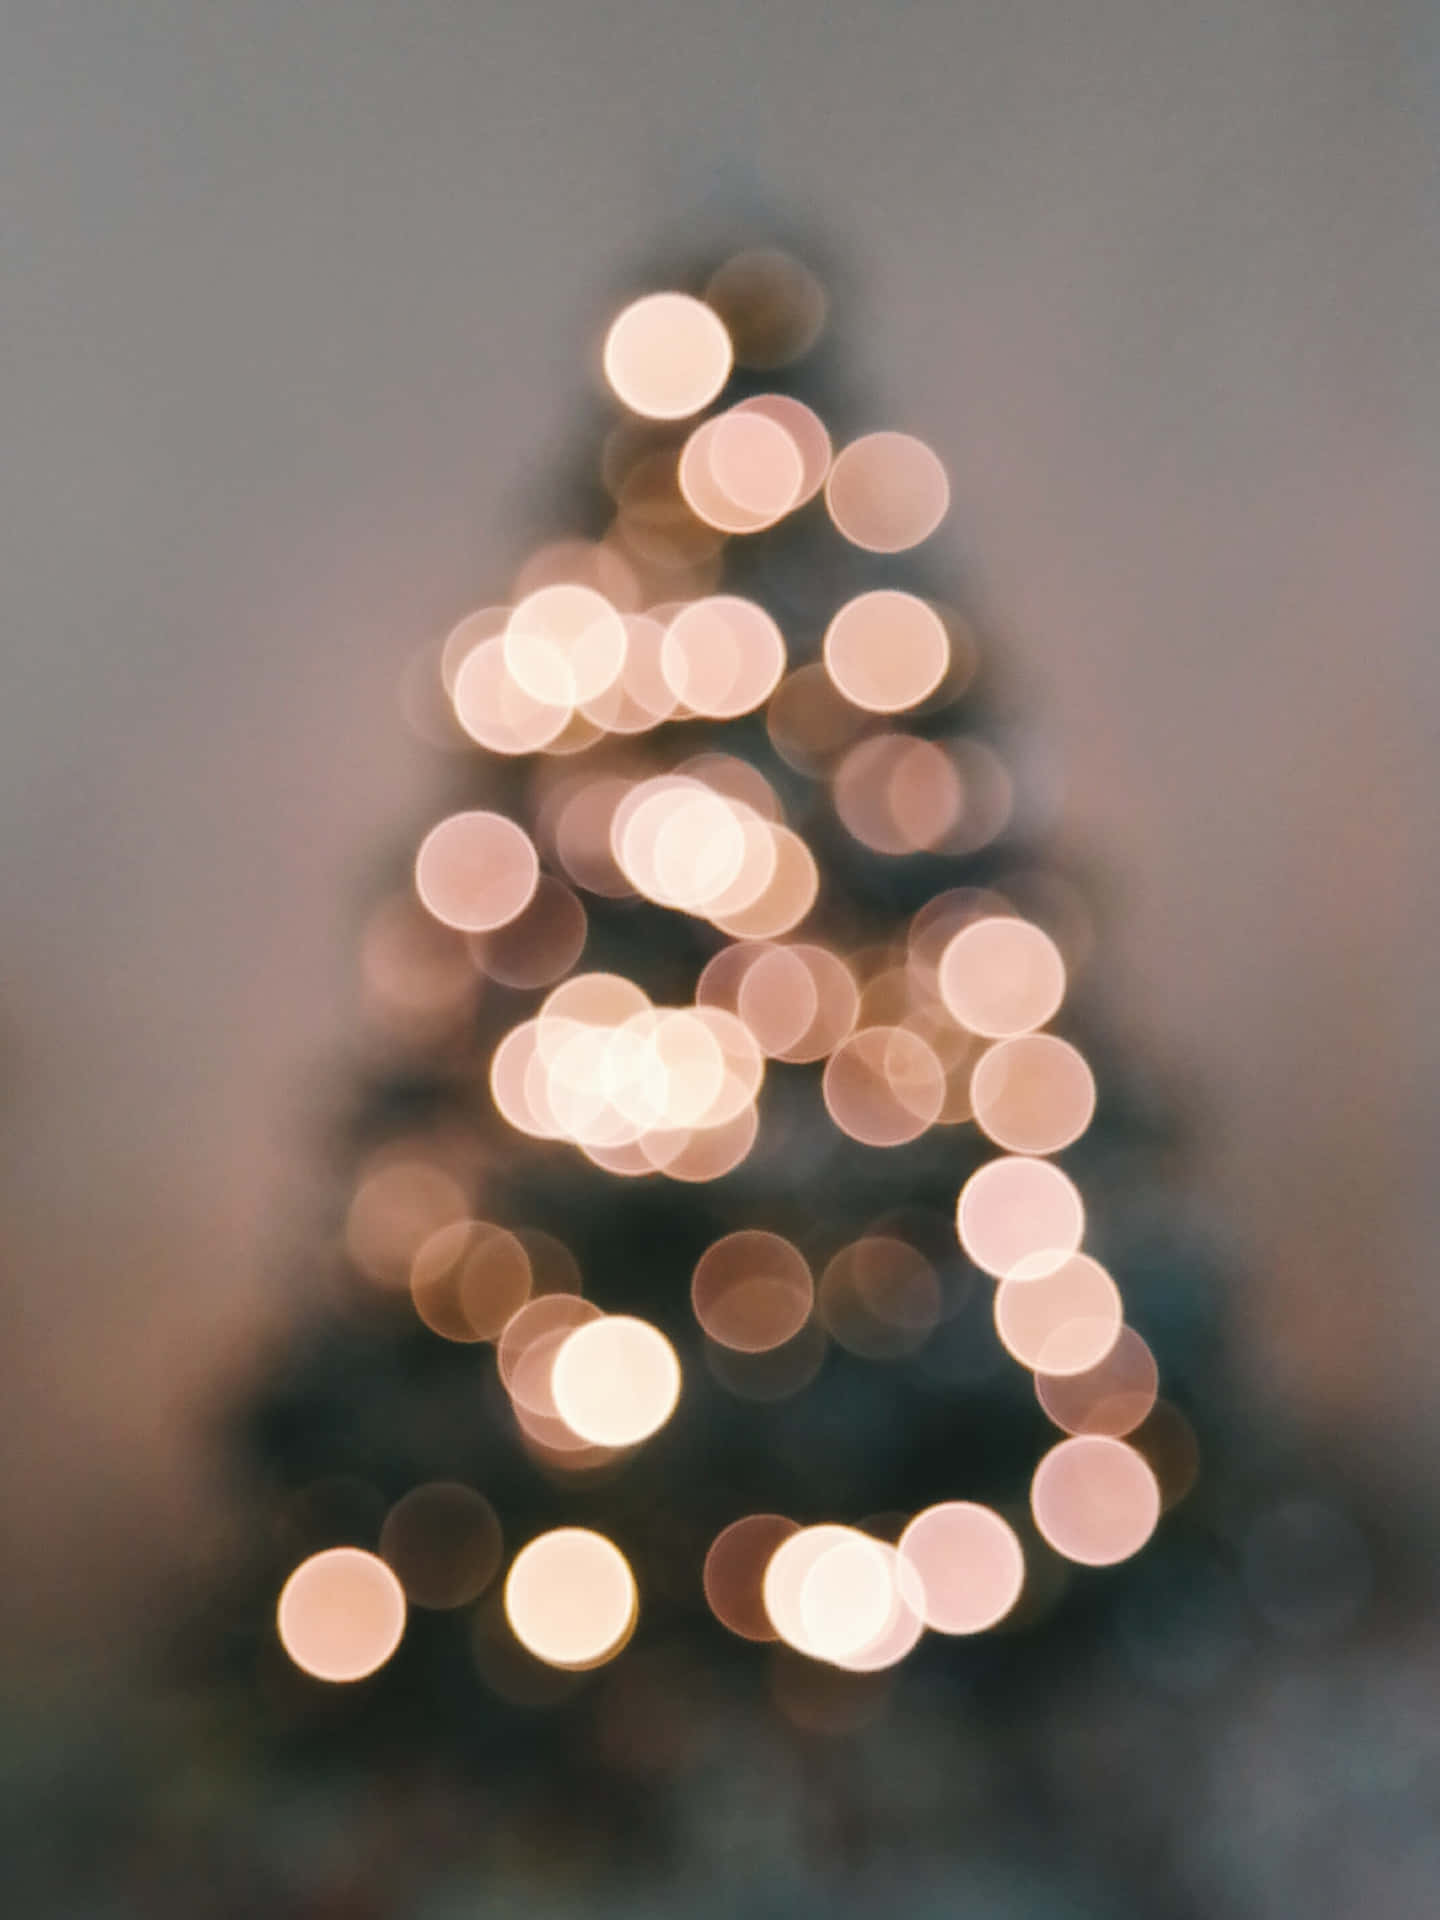 Iphone Christmas Aesthetic Tree Bokeh Lights Wallpaper